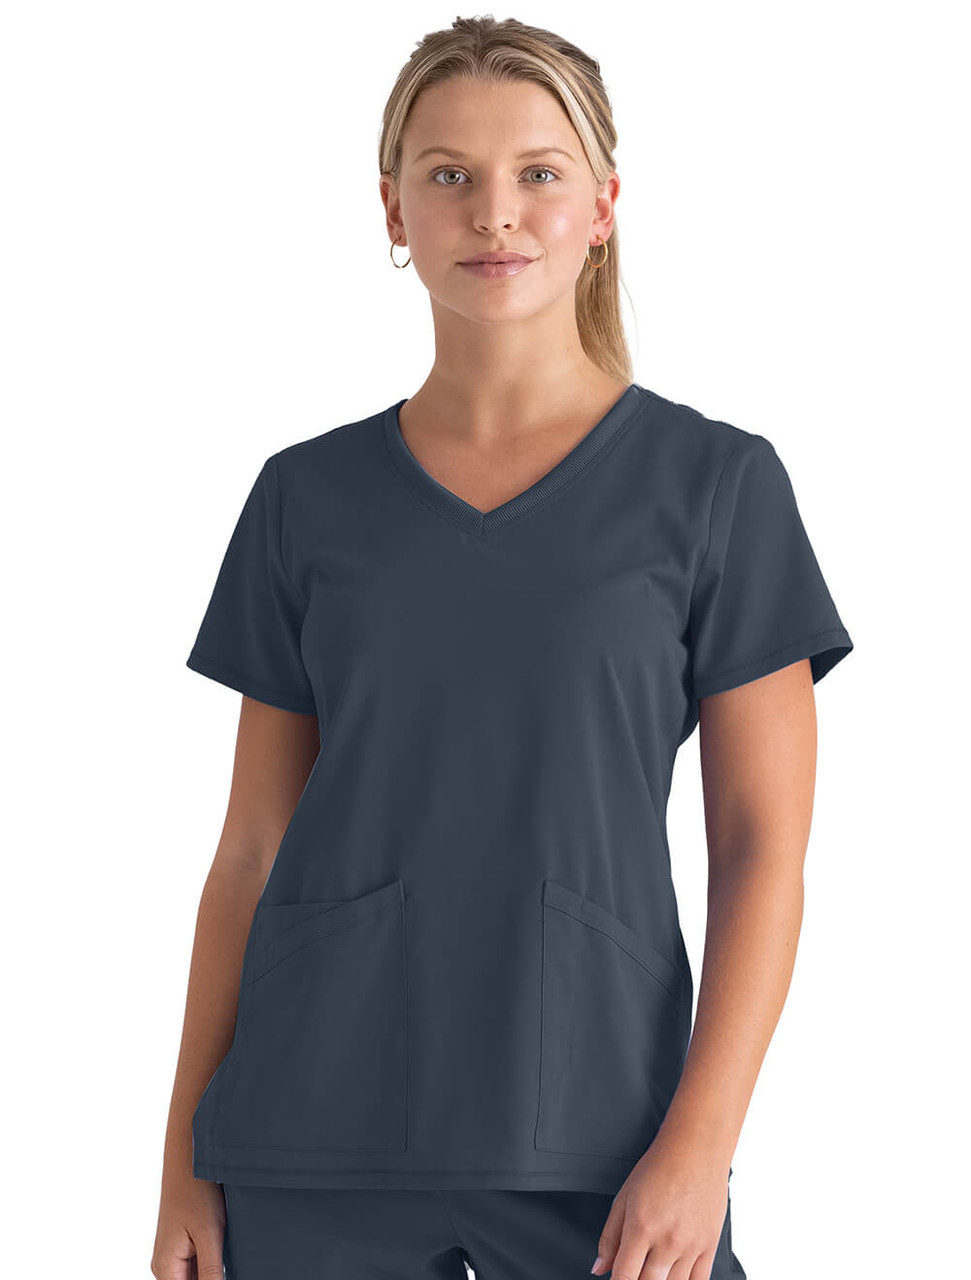 Grey's Anatomy Spandex Stretch Serena V-Neck Top #GRST045 - The Uniform  Outlet